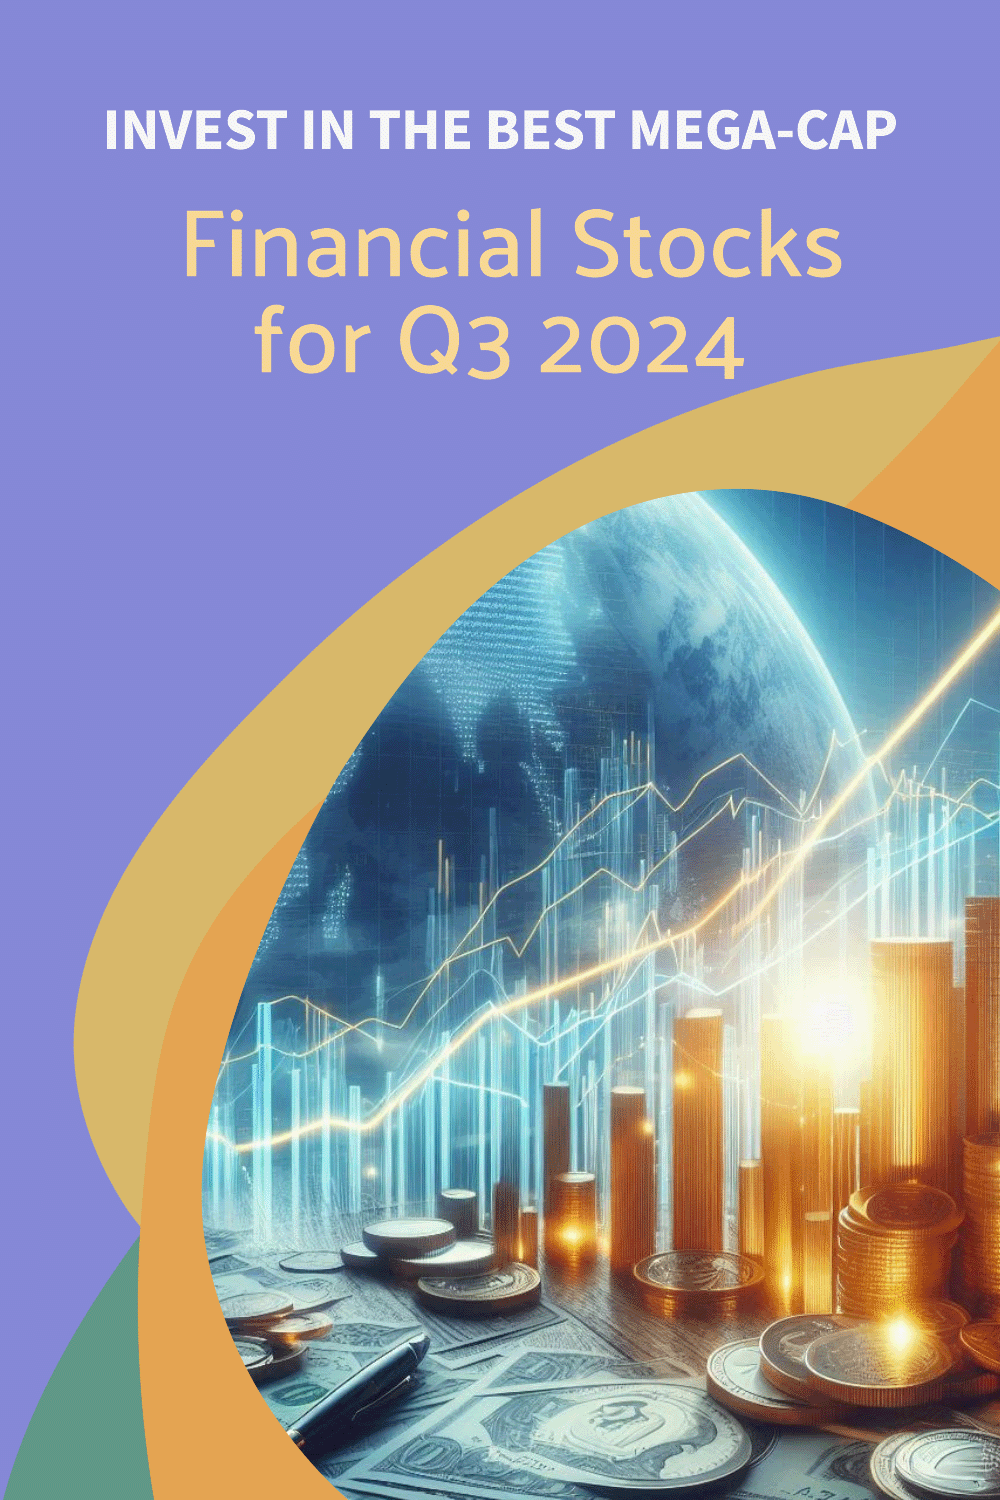 Best mega-cap financial stocks to invest in Q3 2024